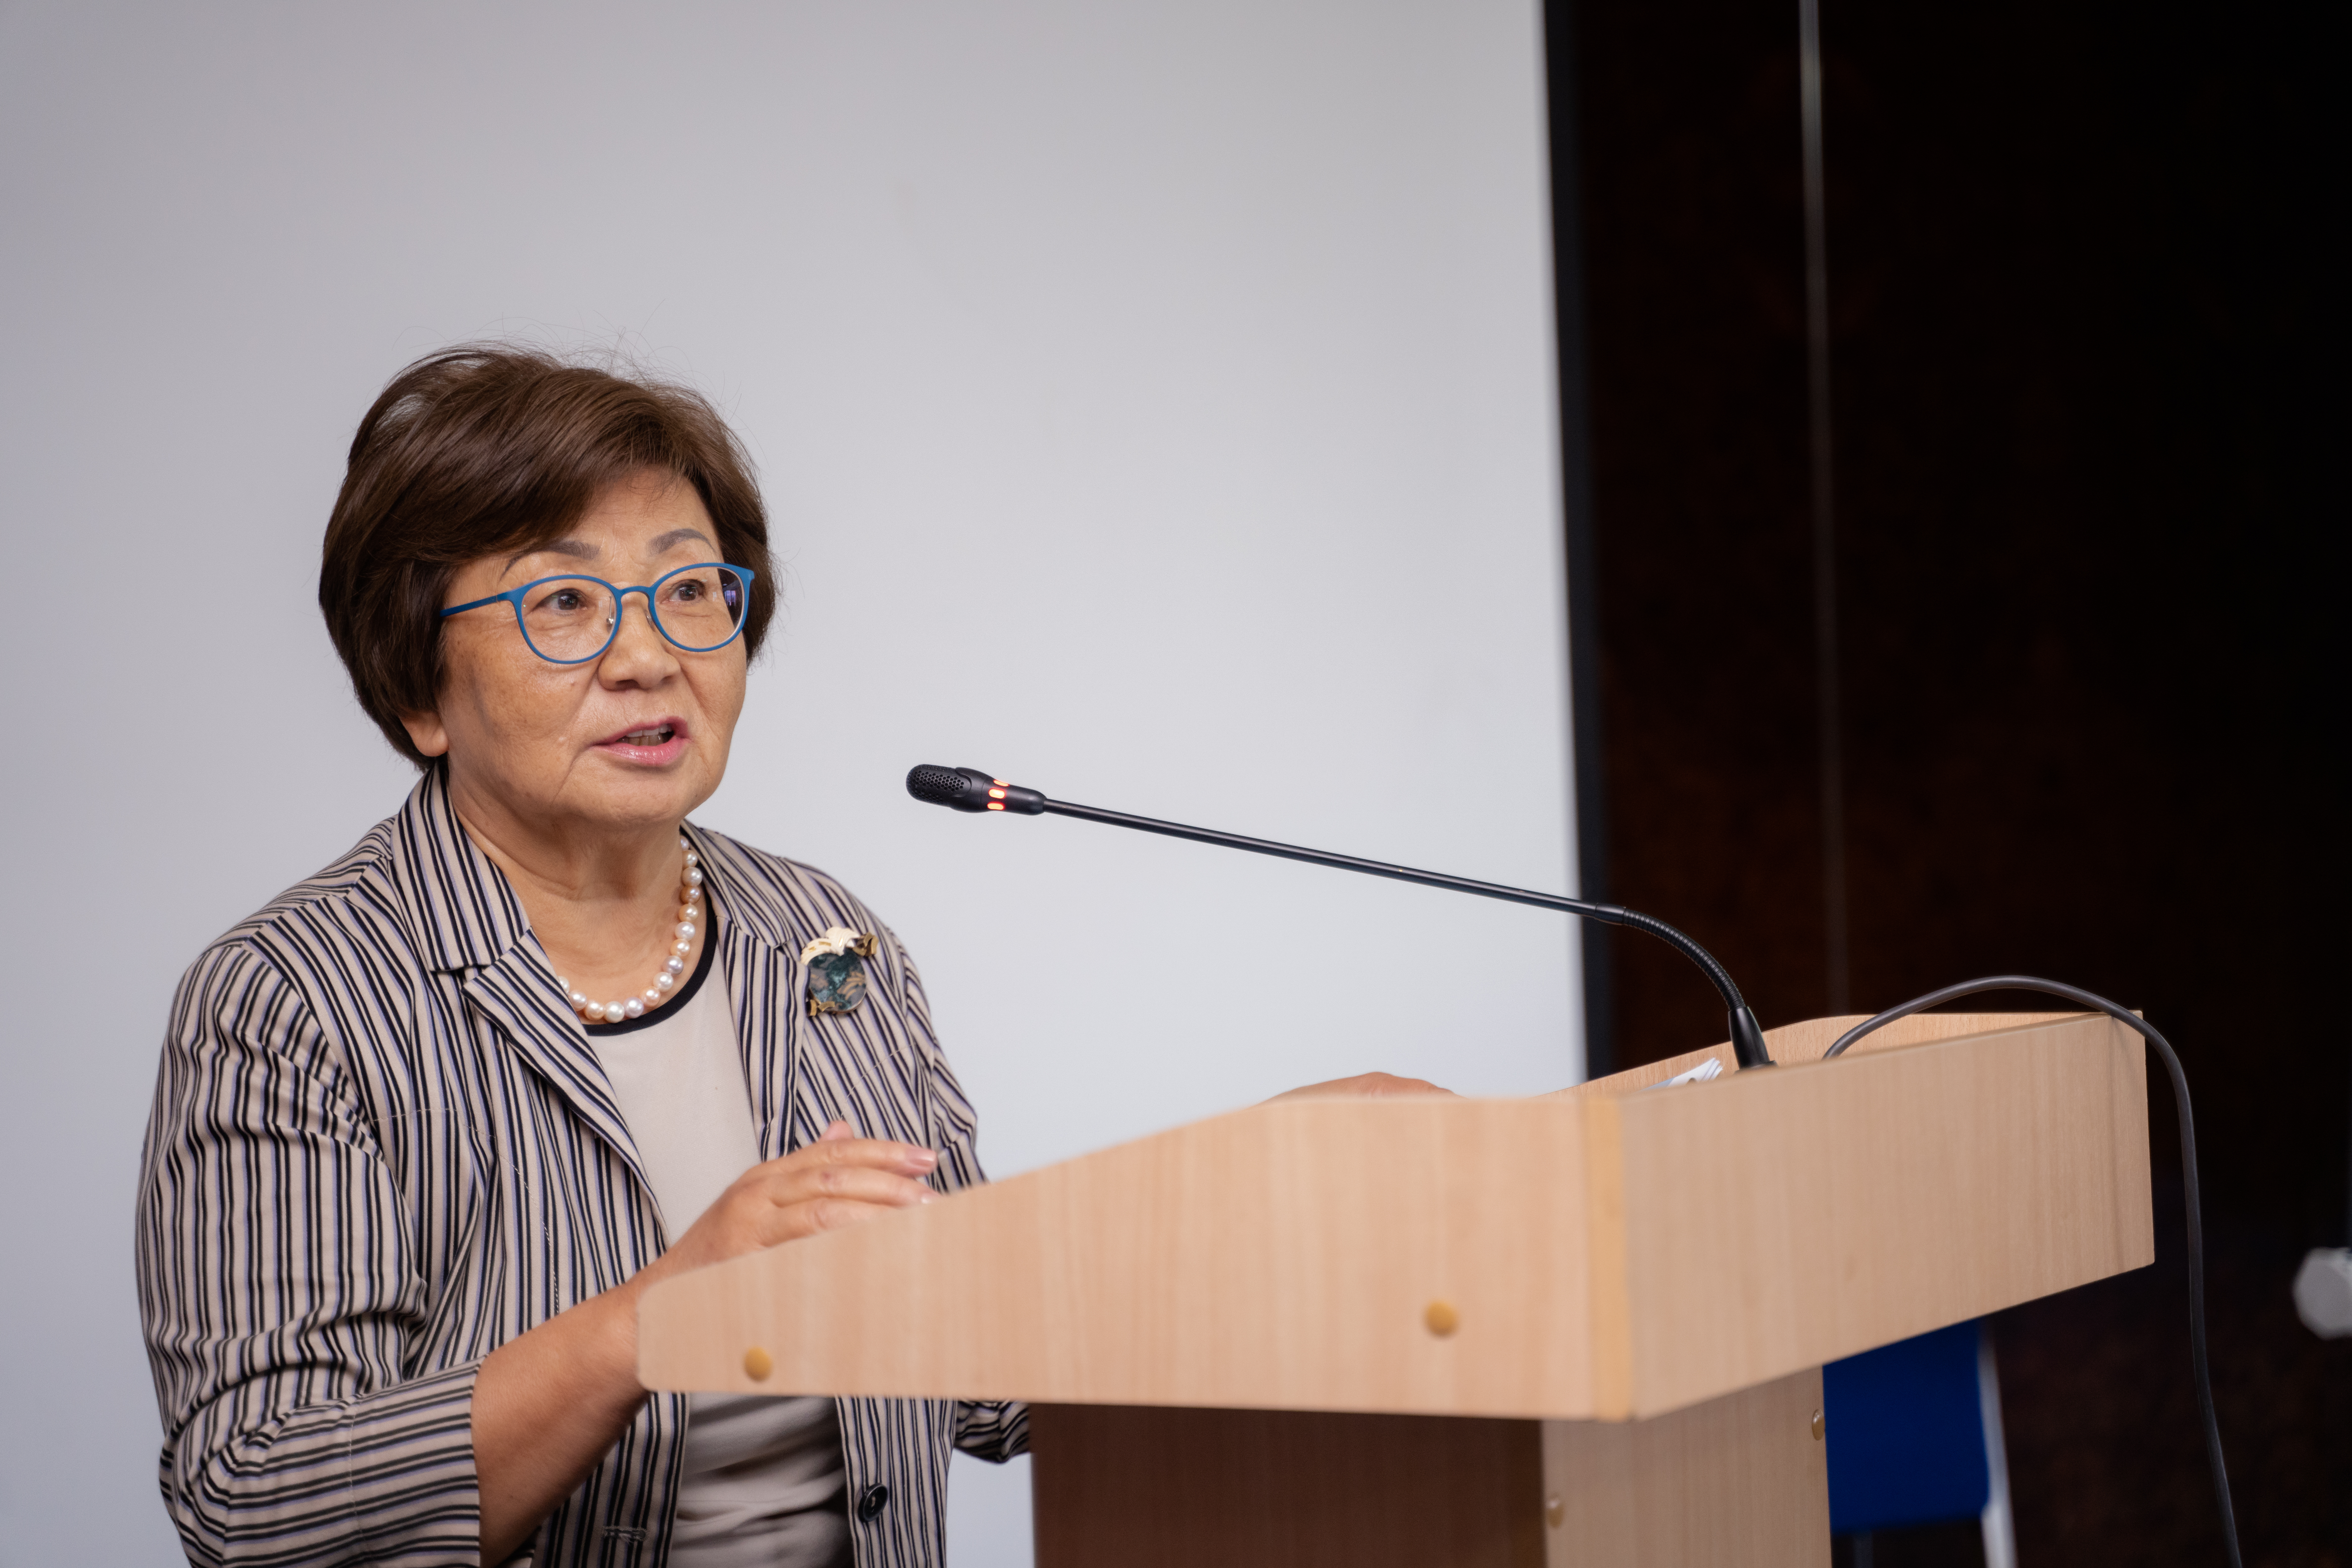 Roza Otunbayeva, former President of Kyrgyzstan, at the UniCEN event